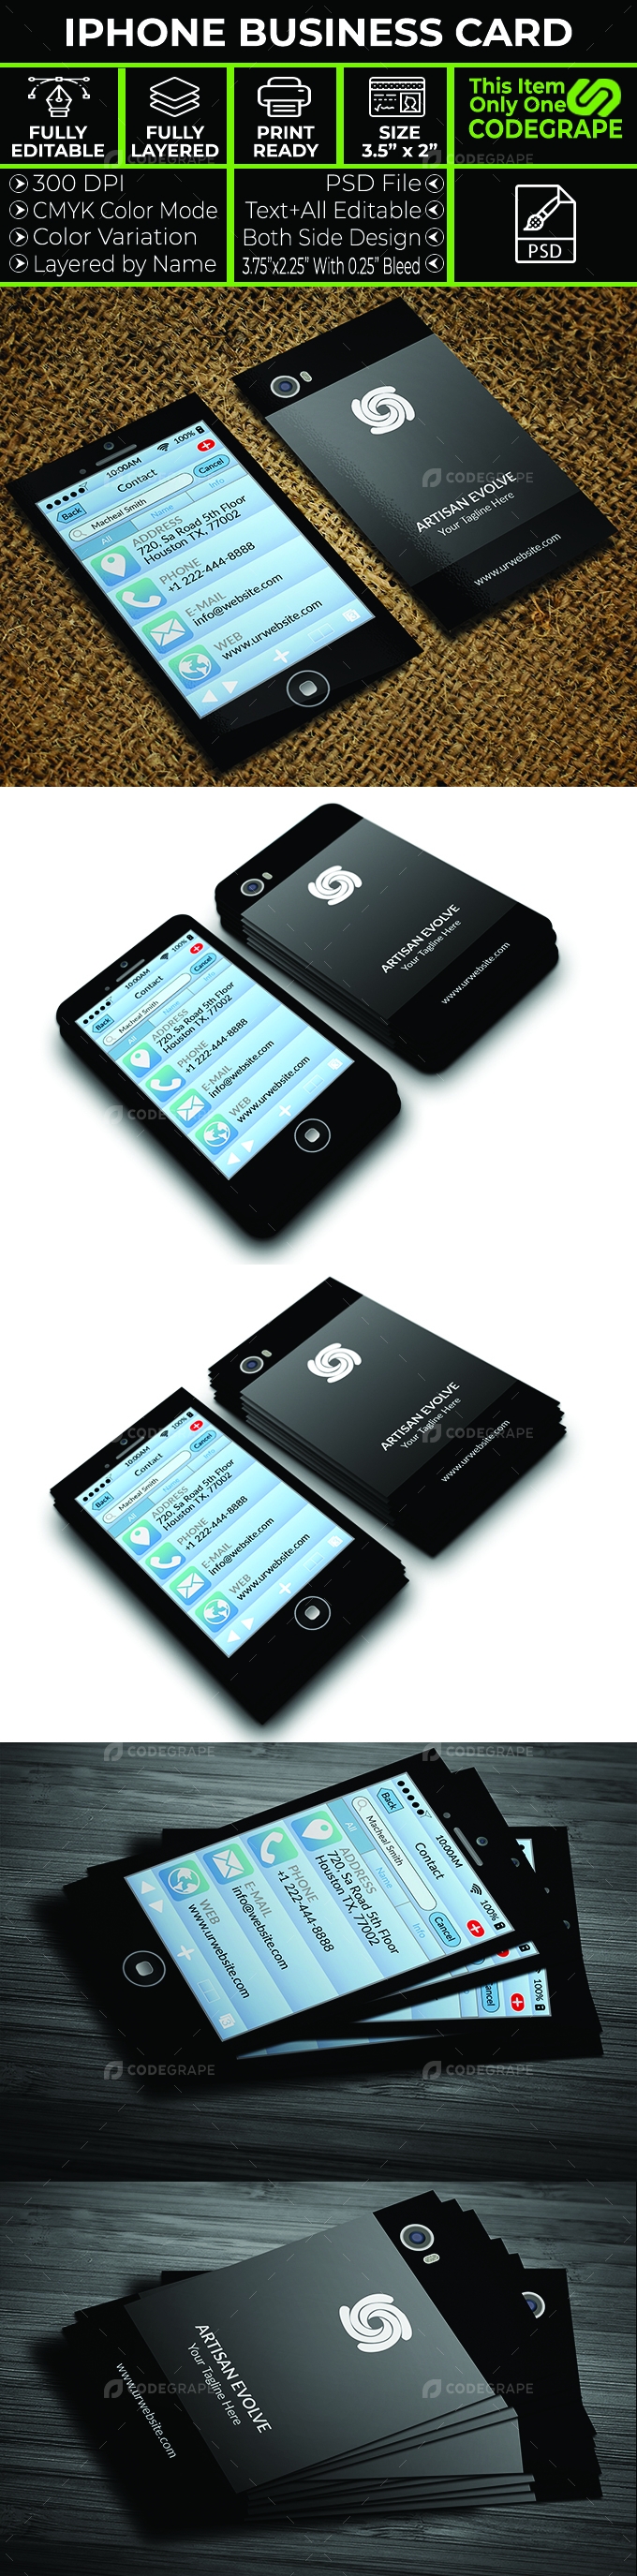 iphone Business Card Design Template